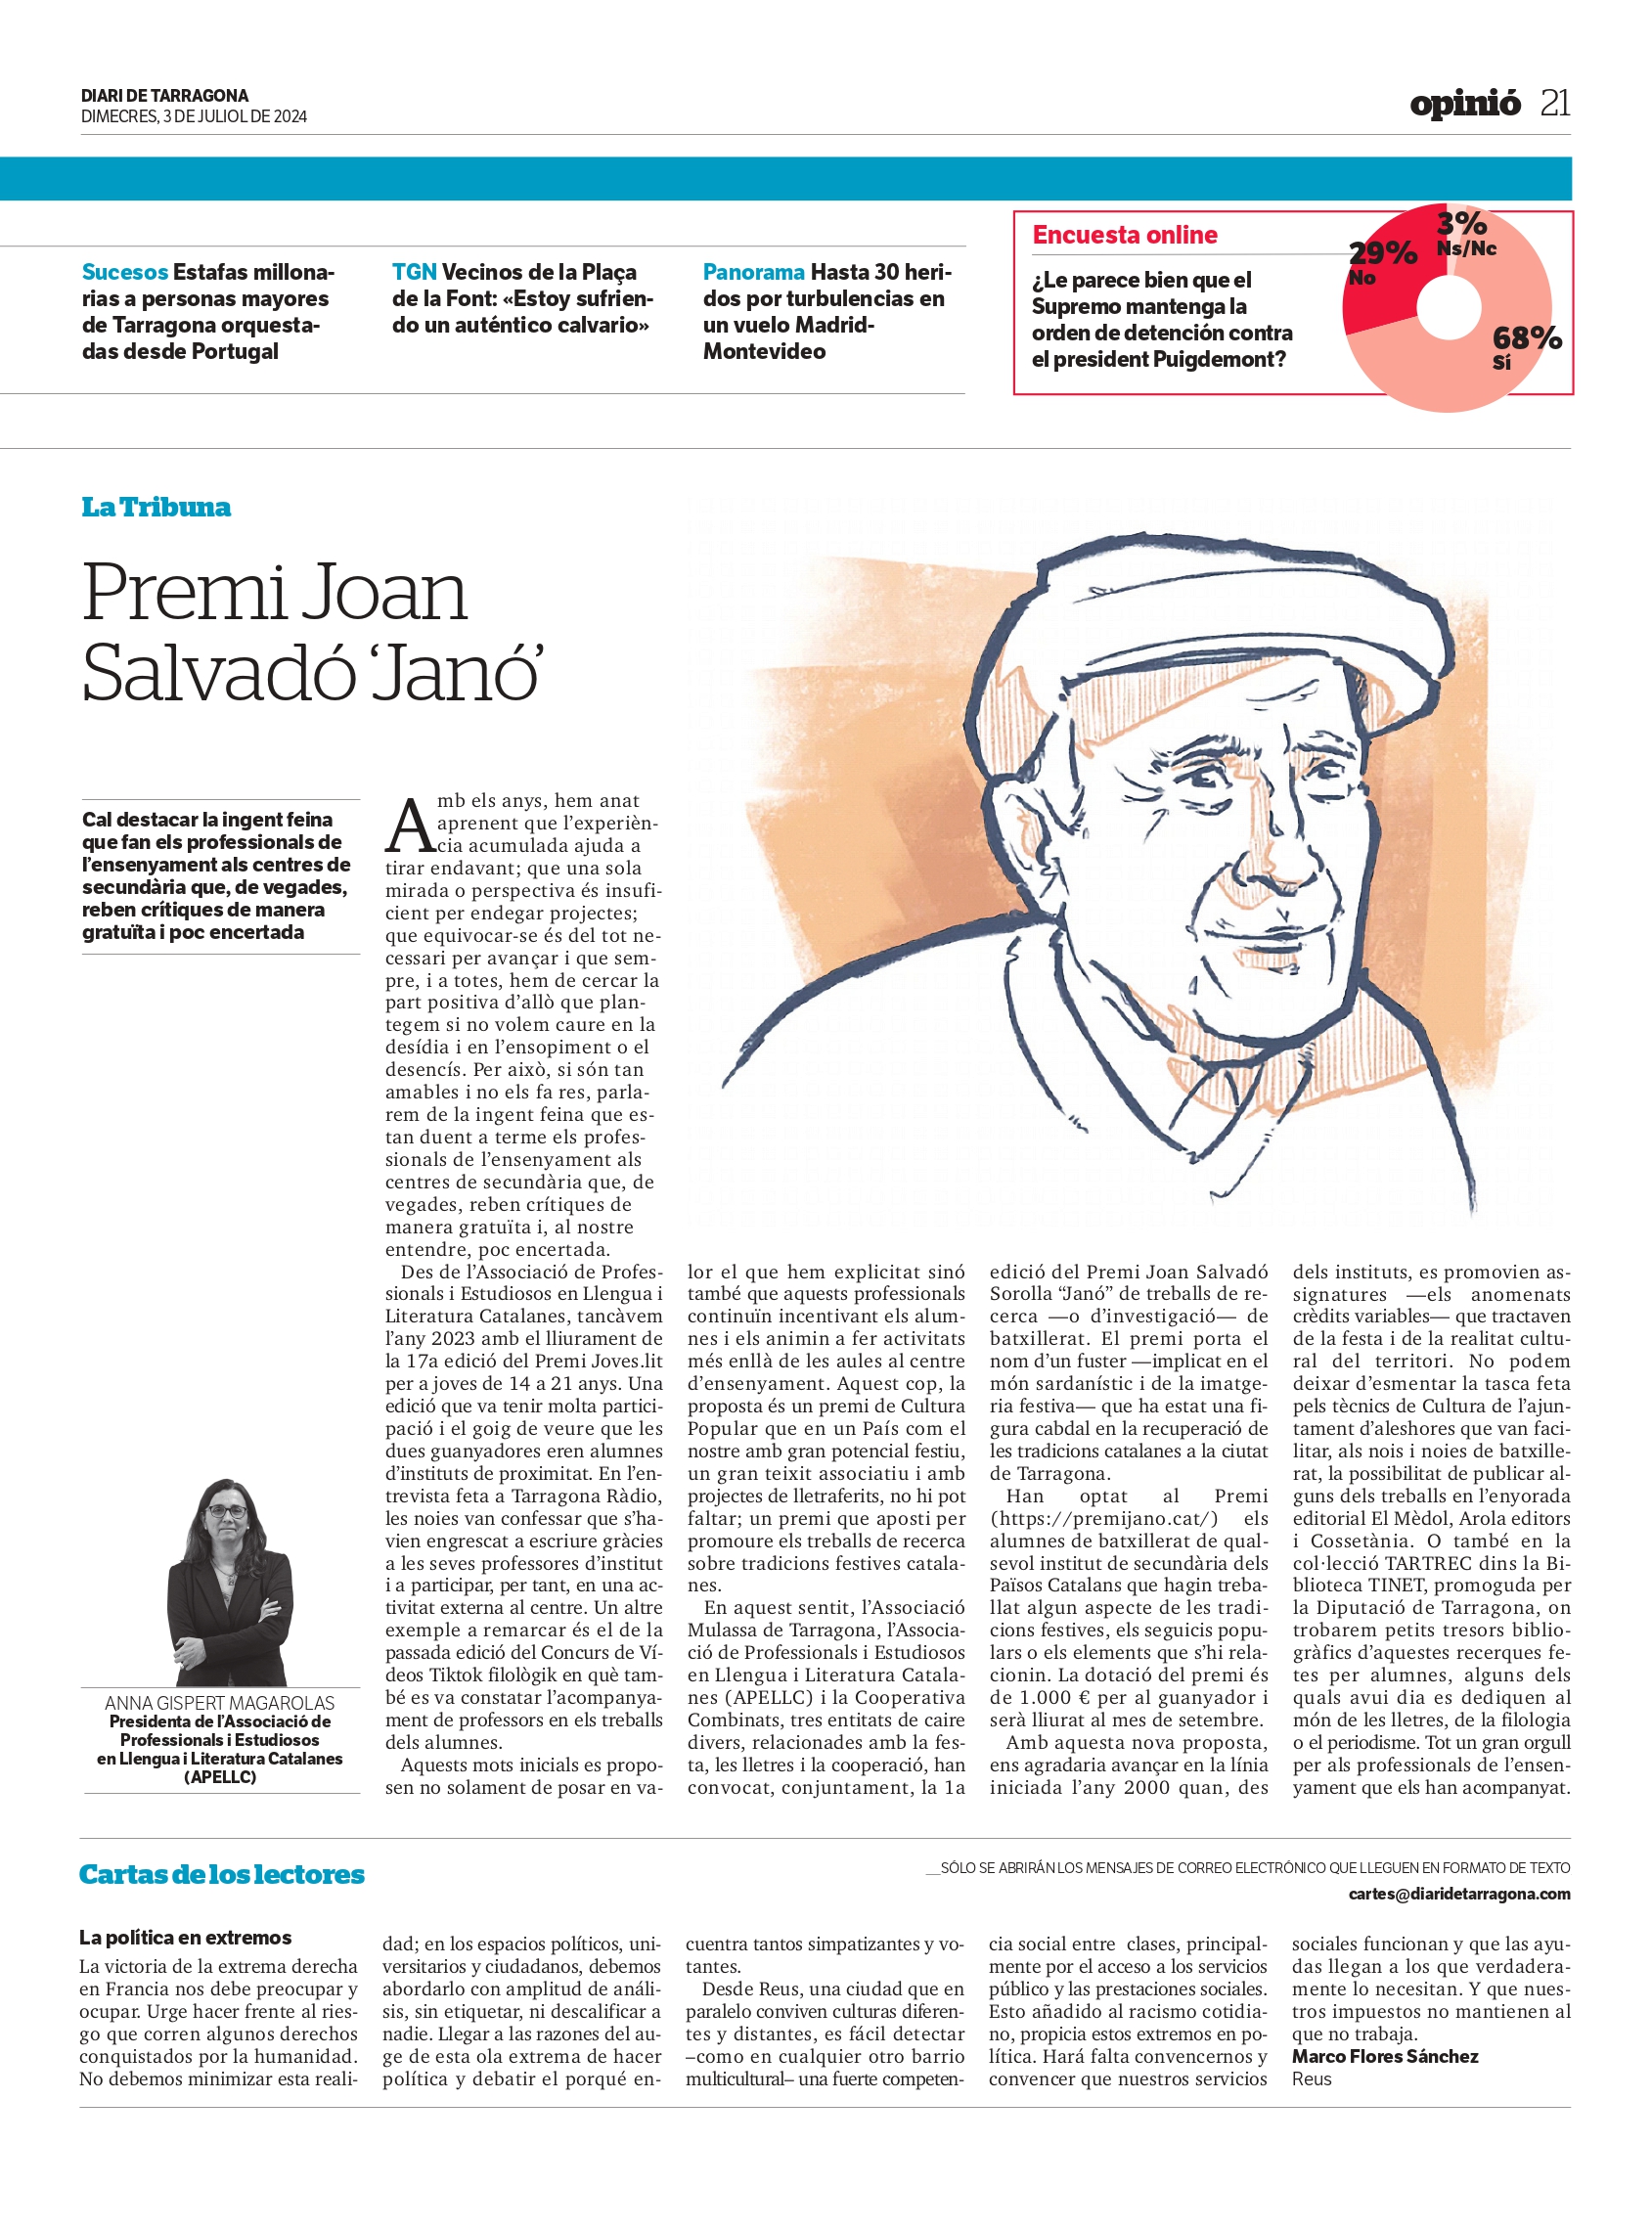 Article “Premi Joan Salvadó ‘Janó'” d’Anna Gispert Magarolas